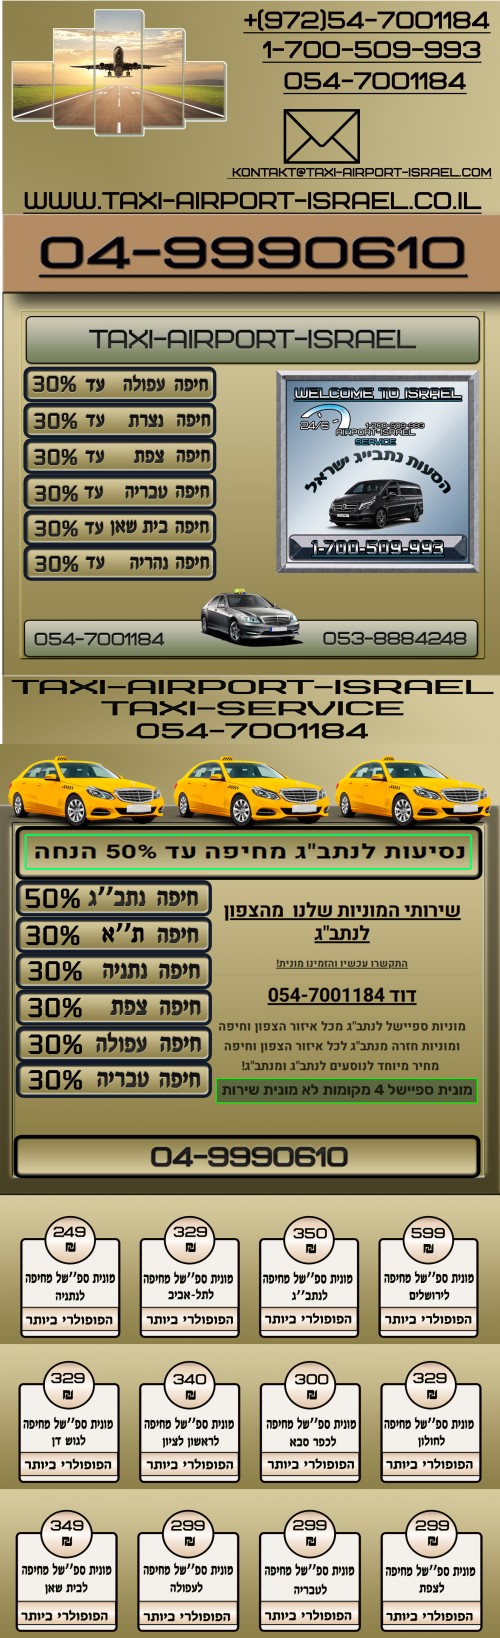 taxi-service-airport.com Image